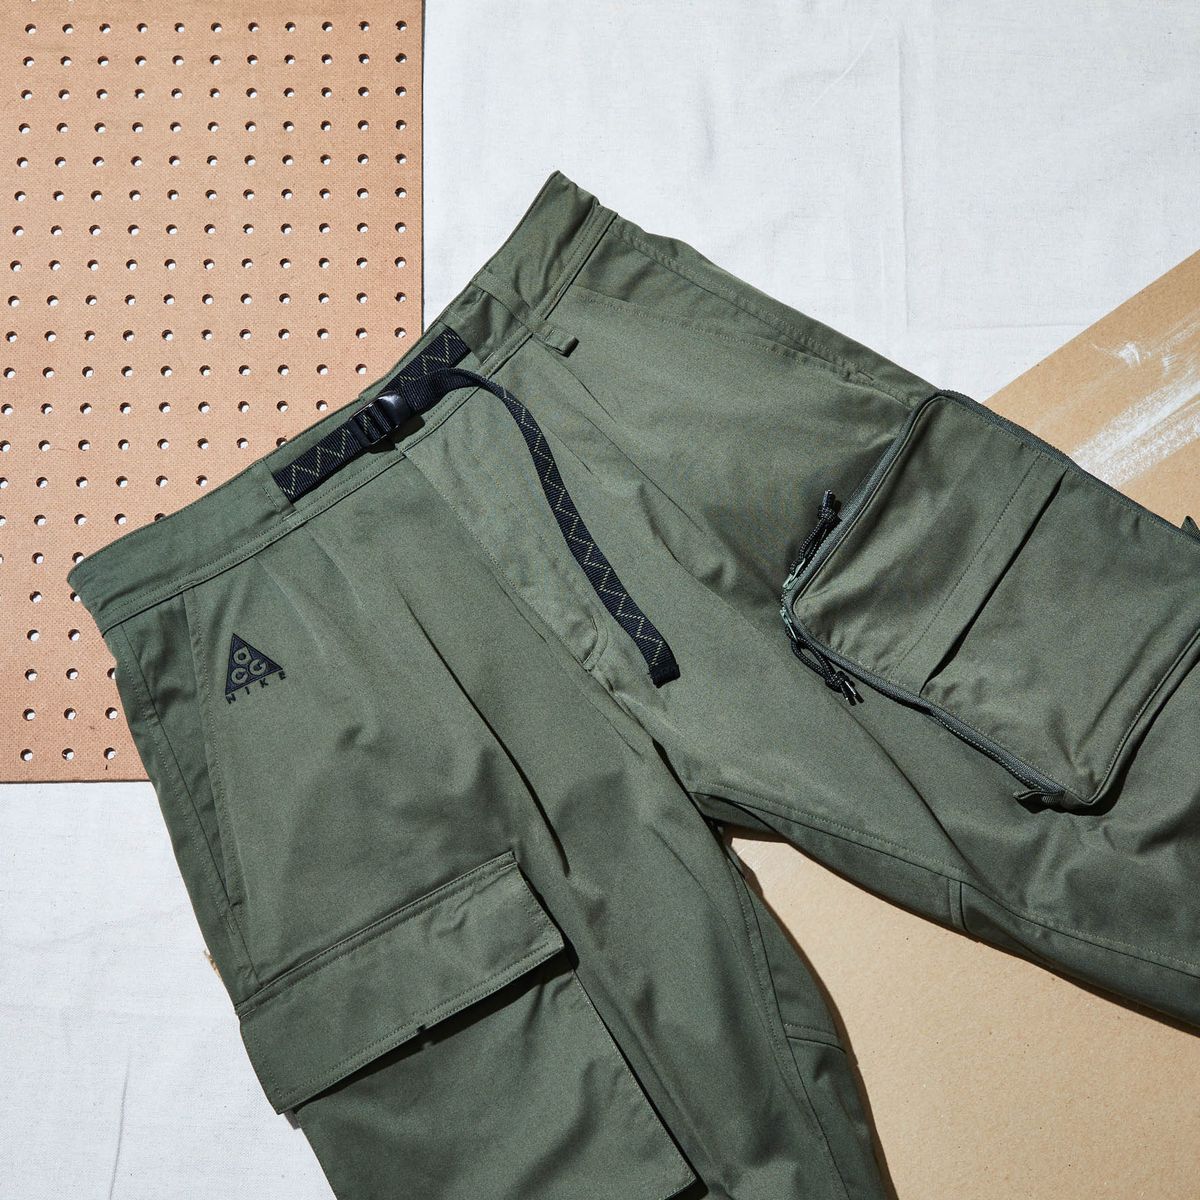 My Favorite Cargo Pants! Nike Sportswear Cargo Pant Review, On